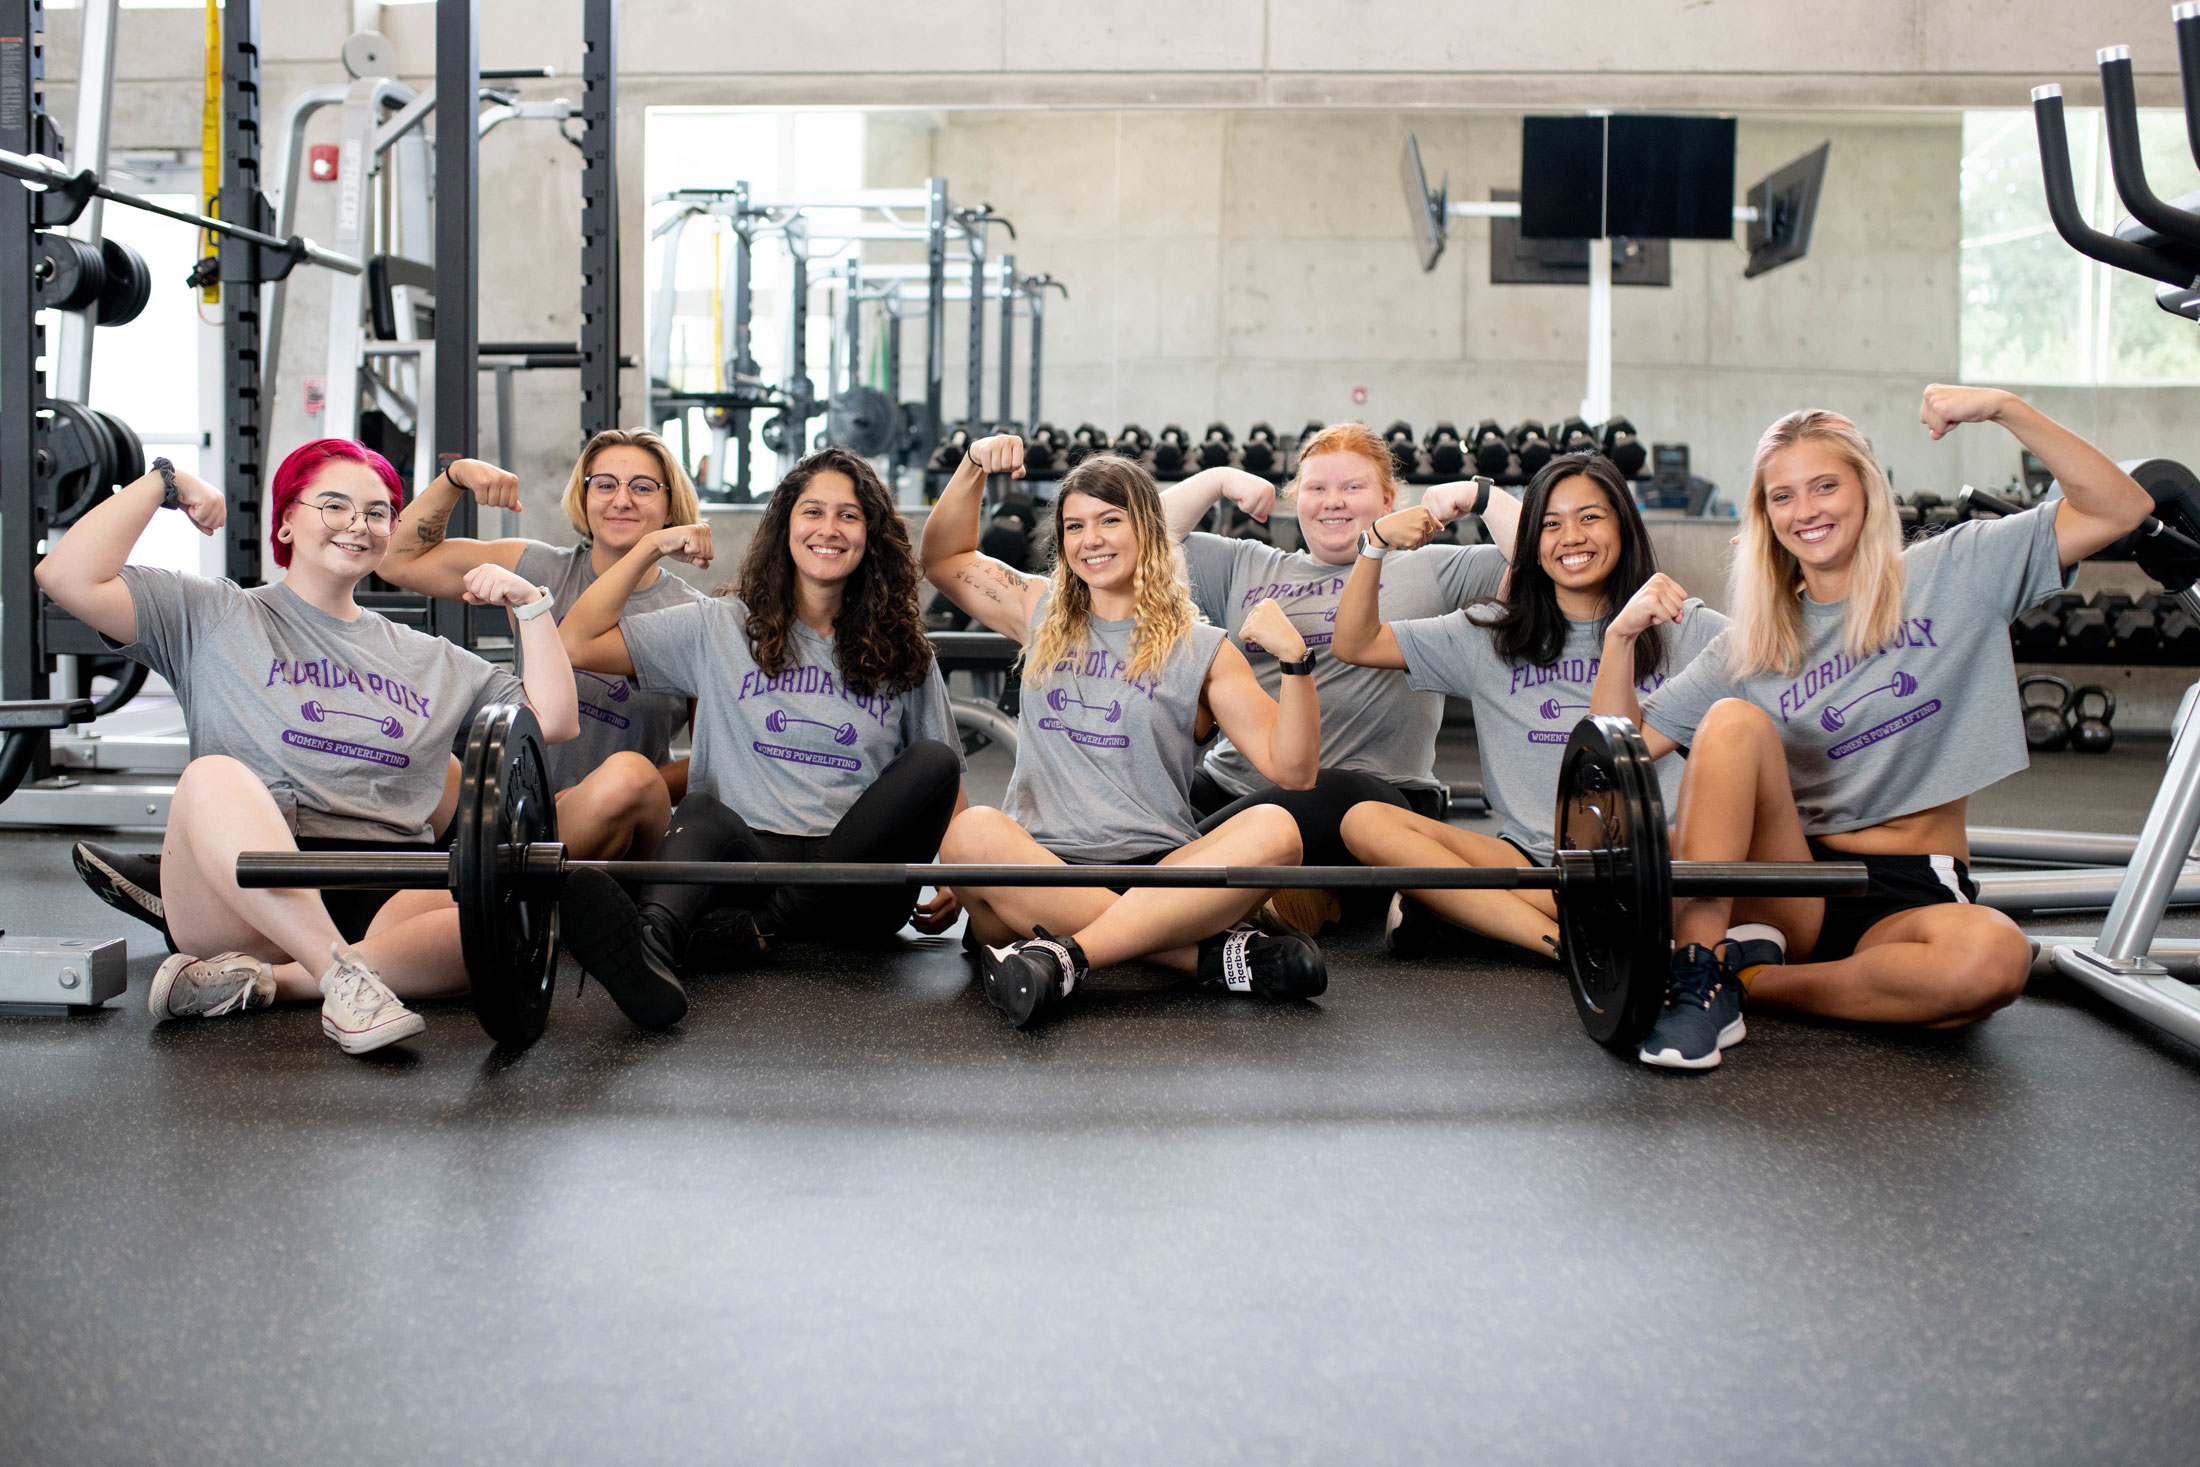 Florida Polytechnic University Women’s Powerlifting team